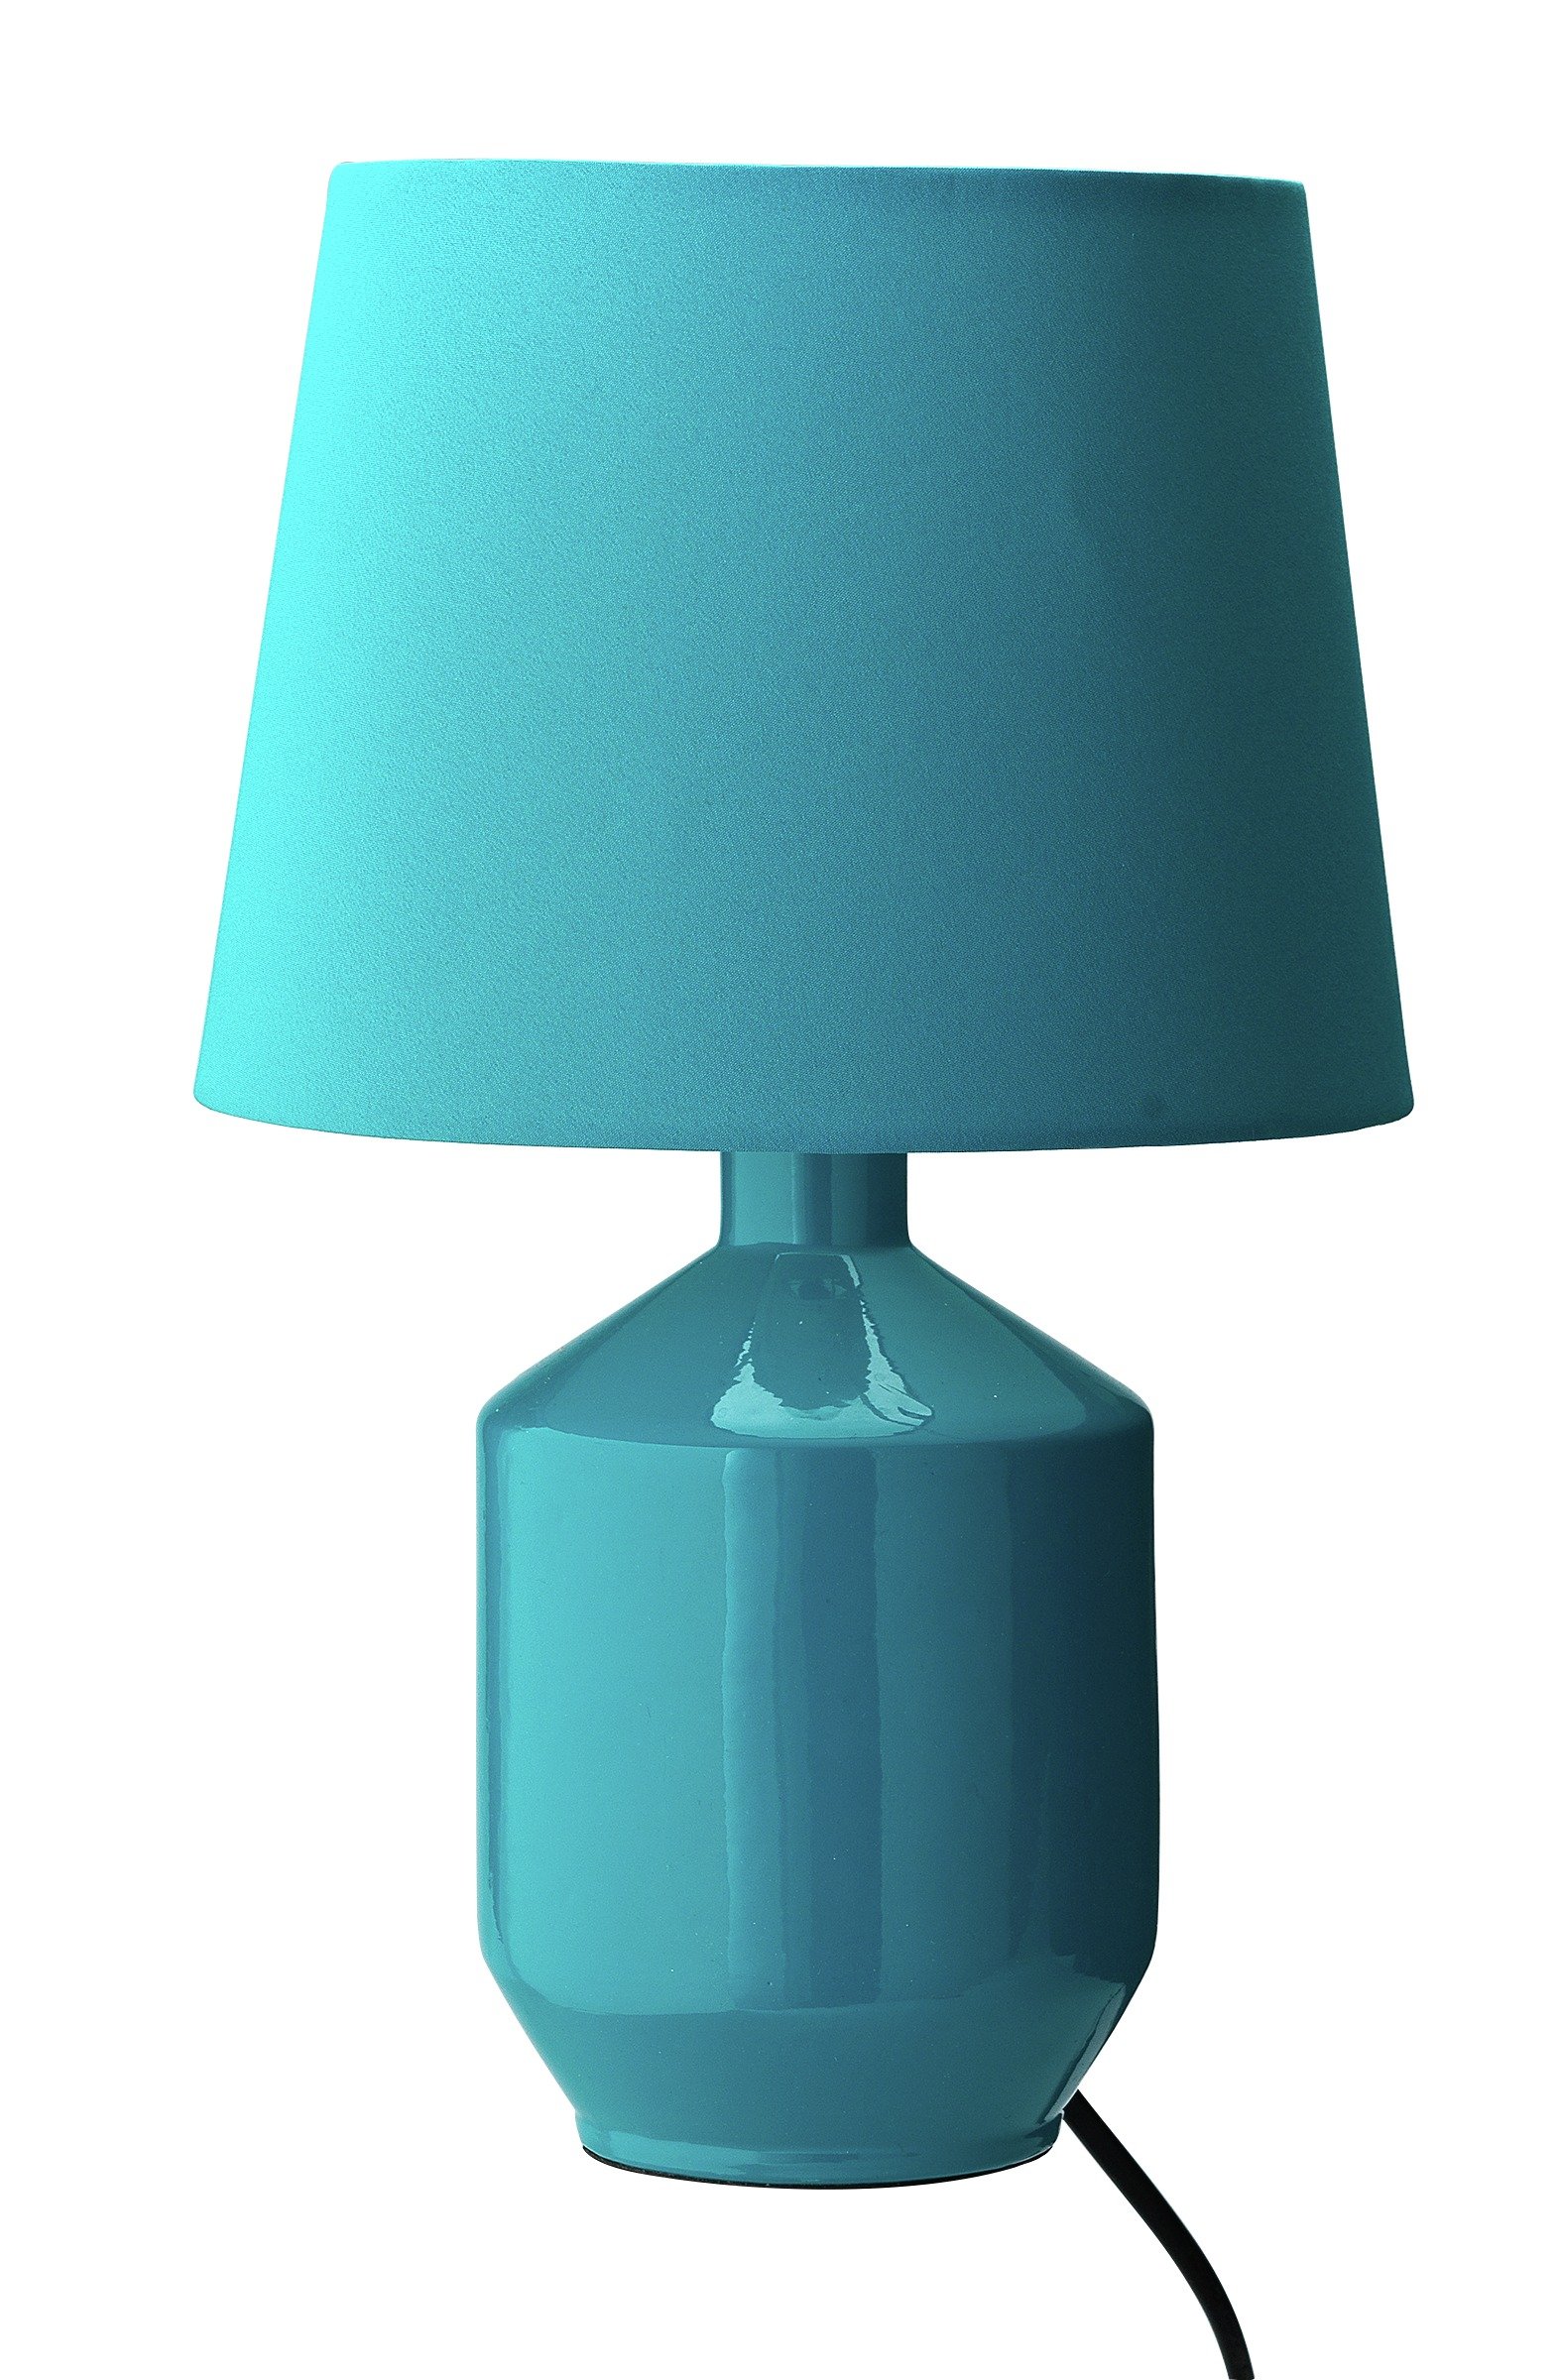 Argos Home Ceramic Table Lamp - Teal